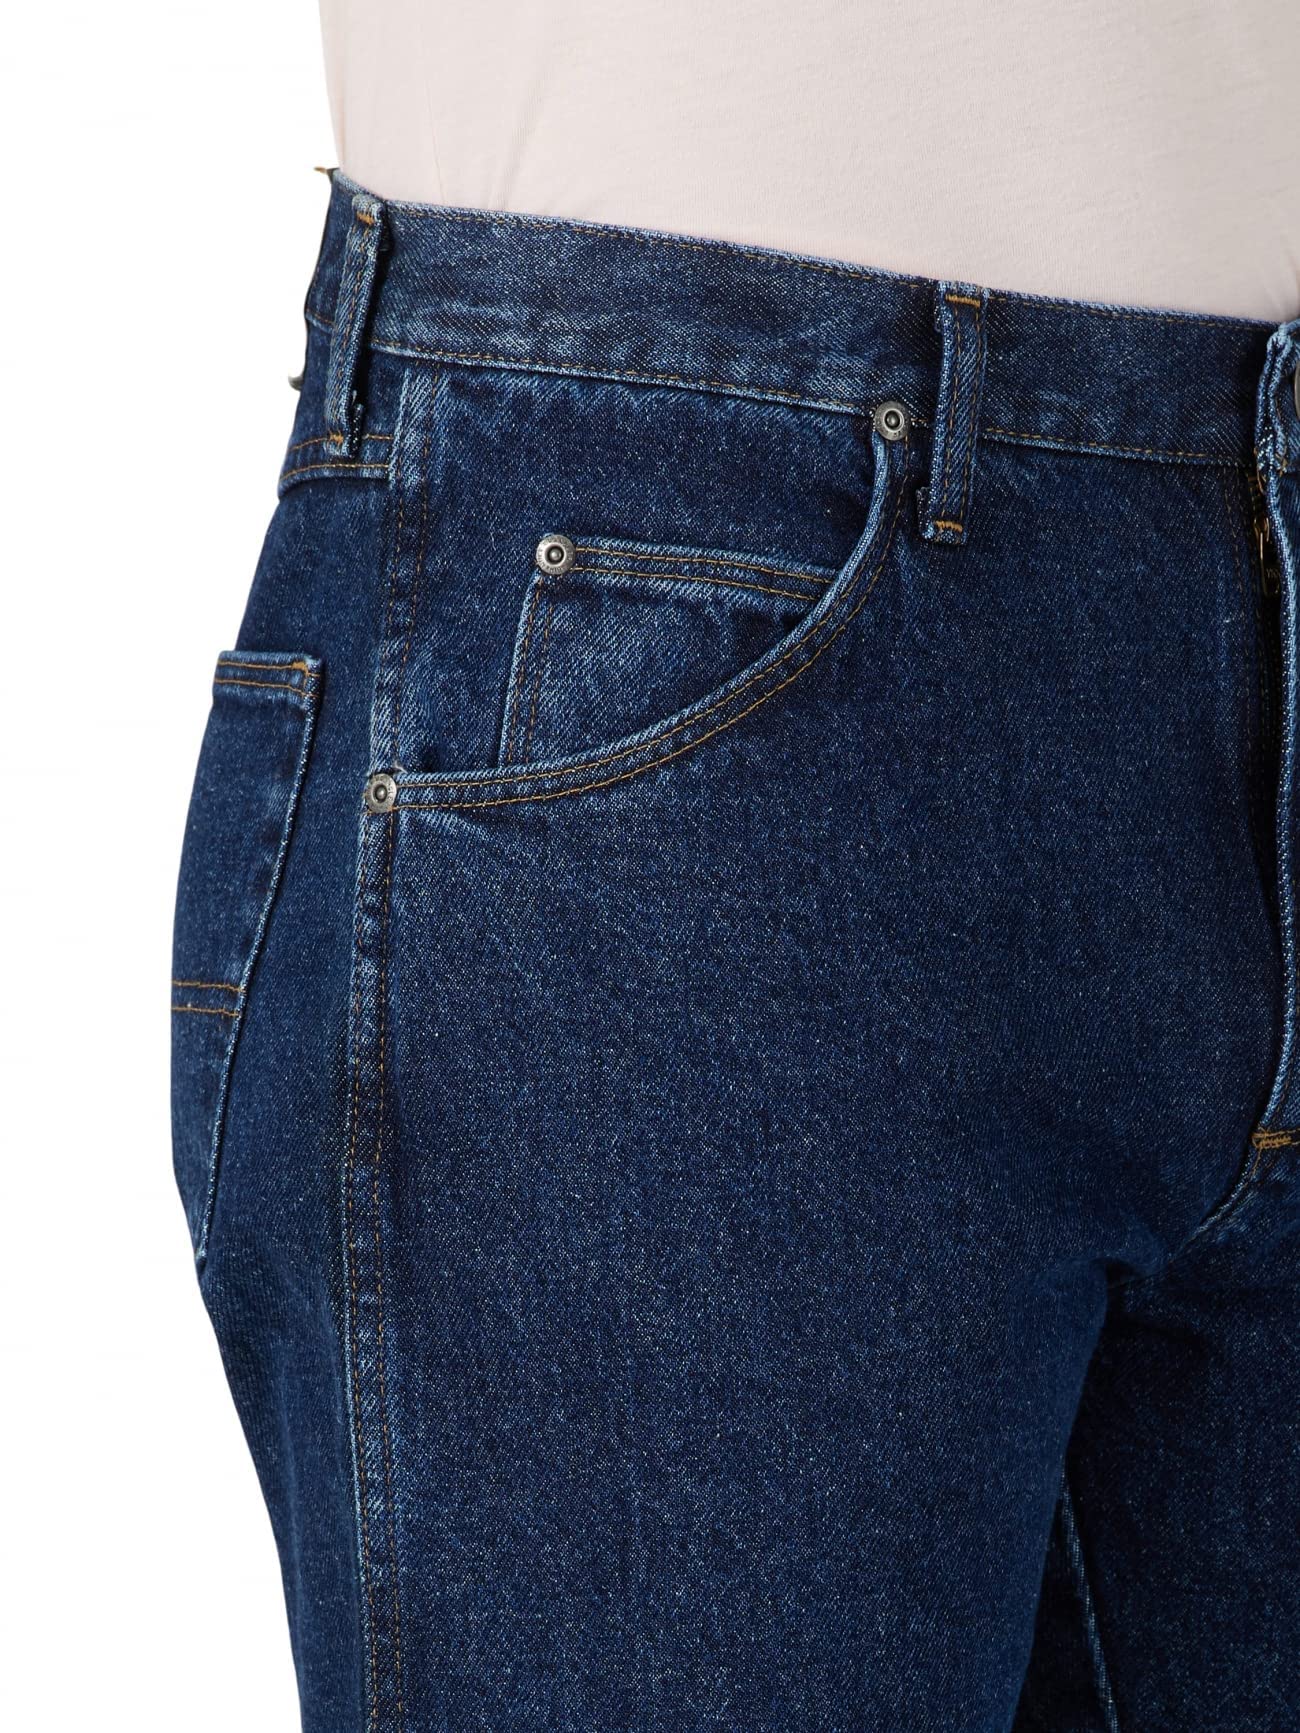 Wrangler Authentics Men's Classic 5-Pocket Regular Fit Cotton Jean, Dark Rinse, 35W x 34L